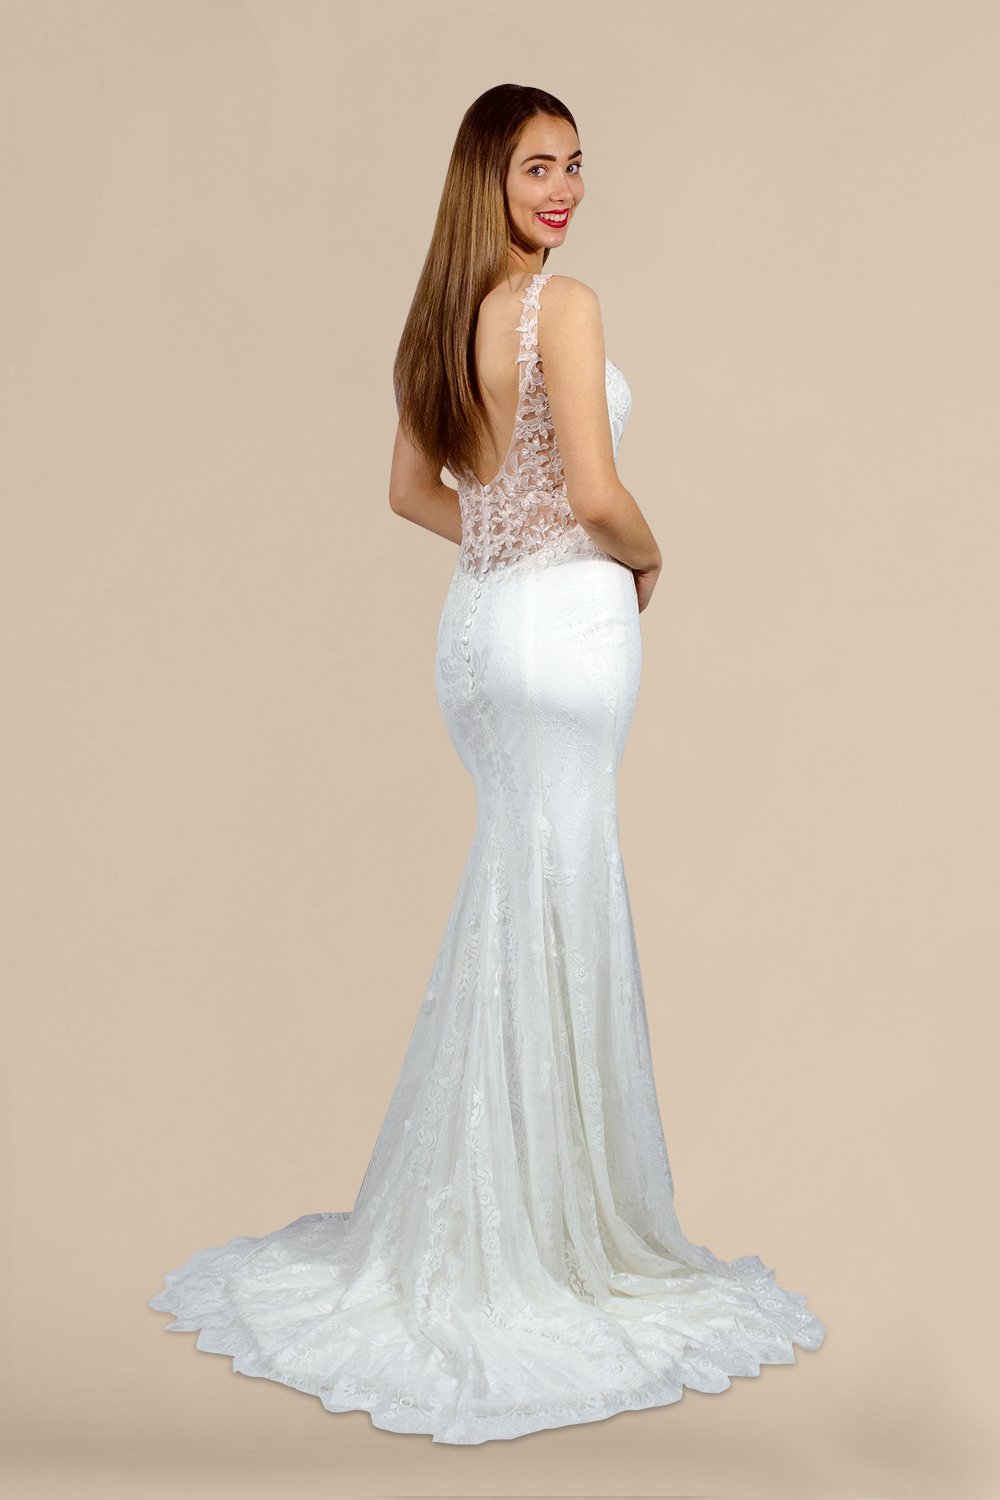 custom bridal dressmaker stretchable lace wedding dress perth australia envious bridal & formal